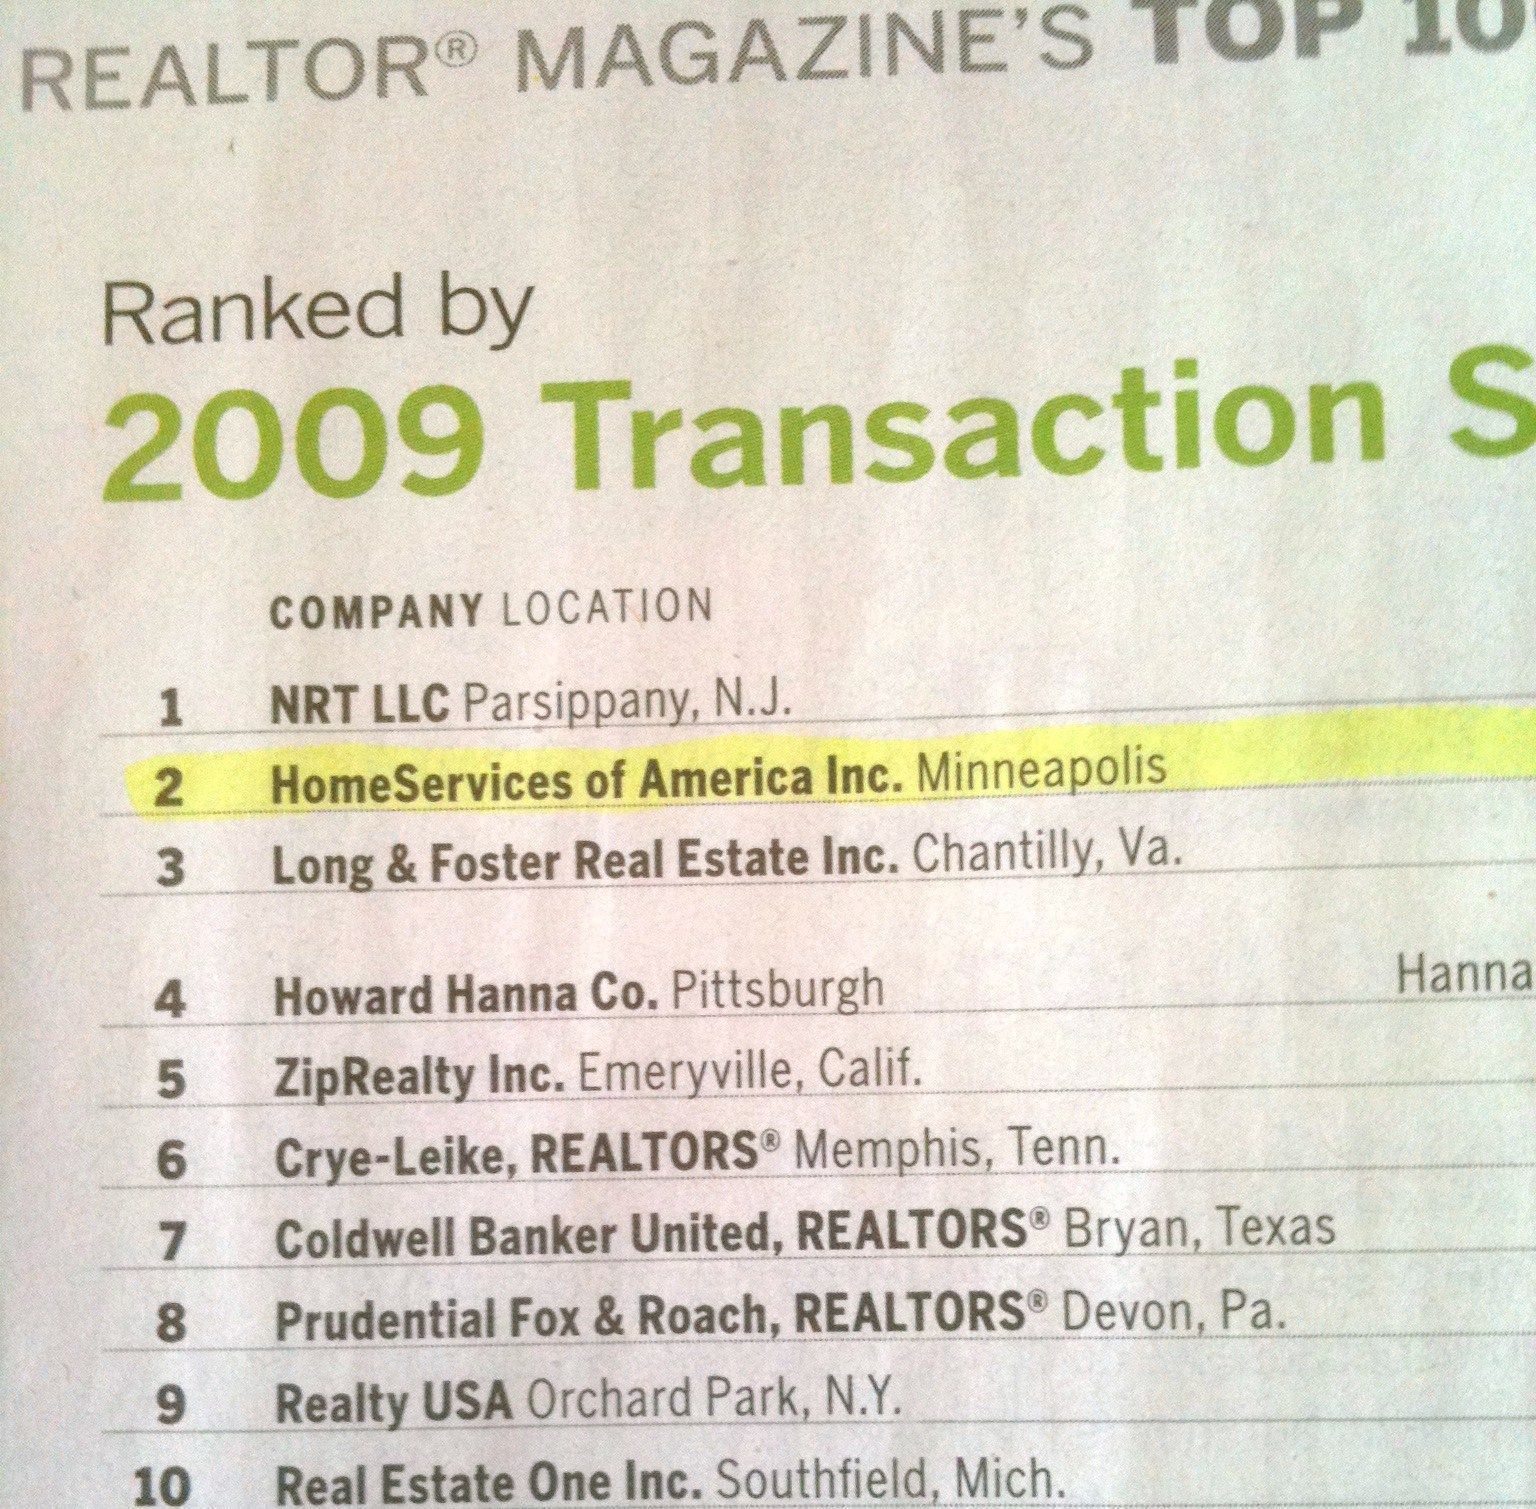 Top Transaction Sides REALTOR Magazine 2009